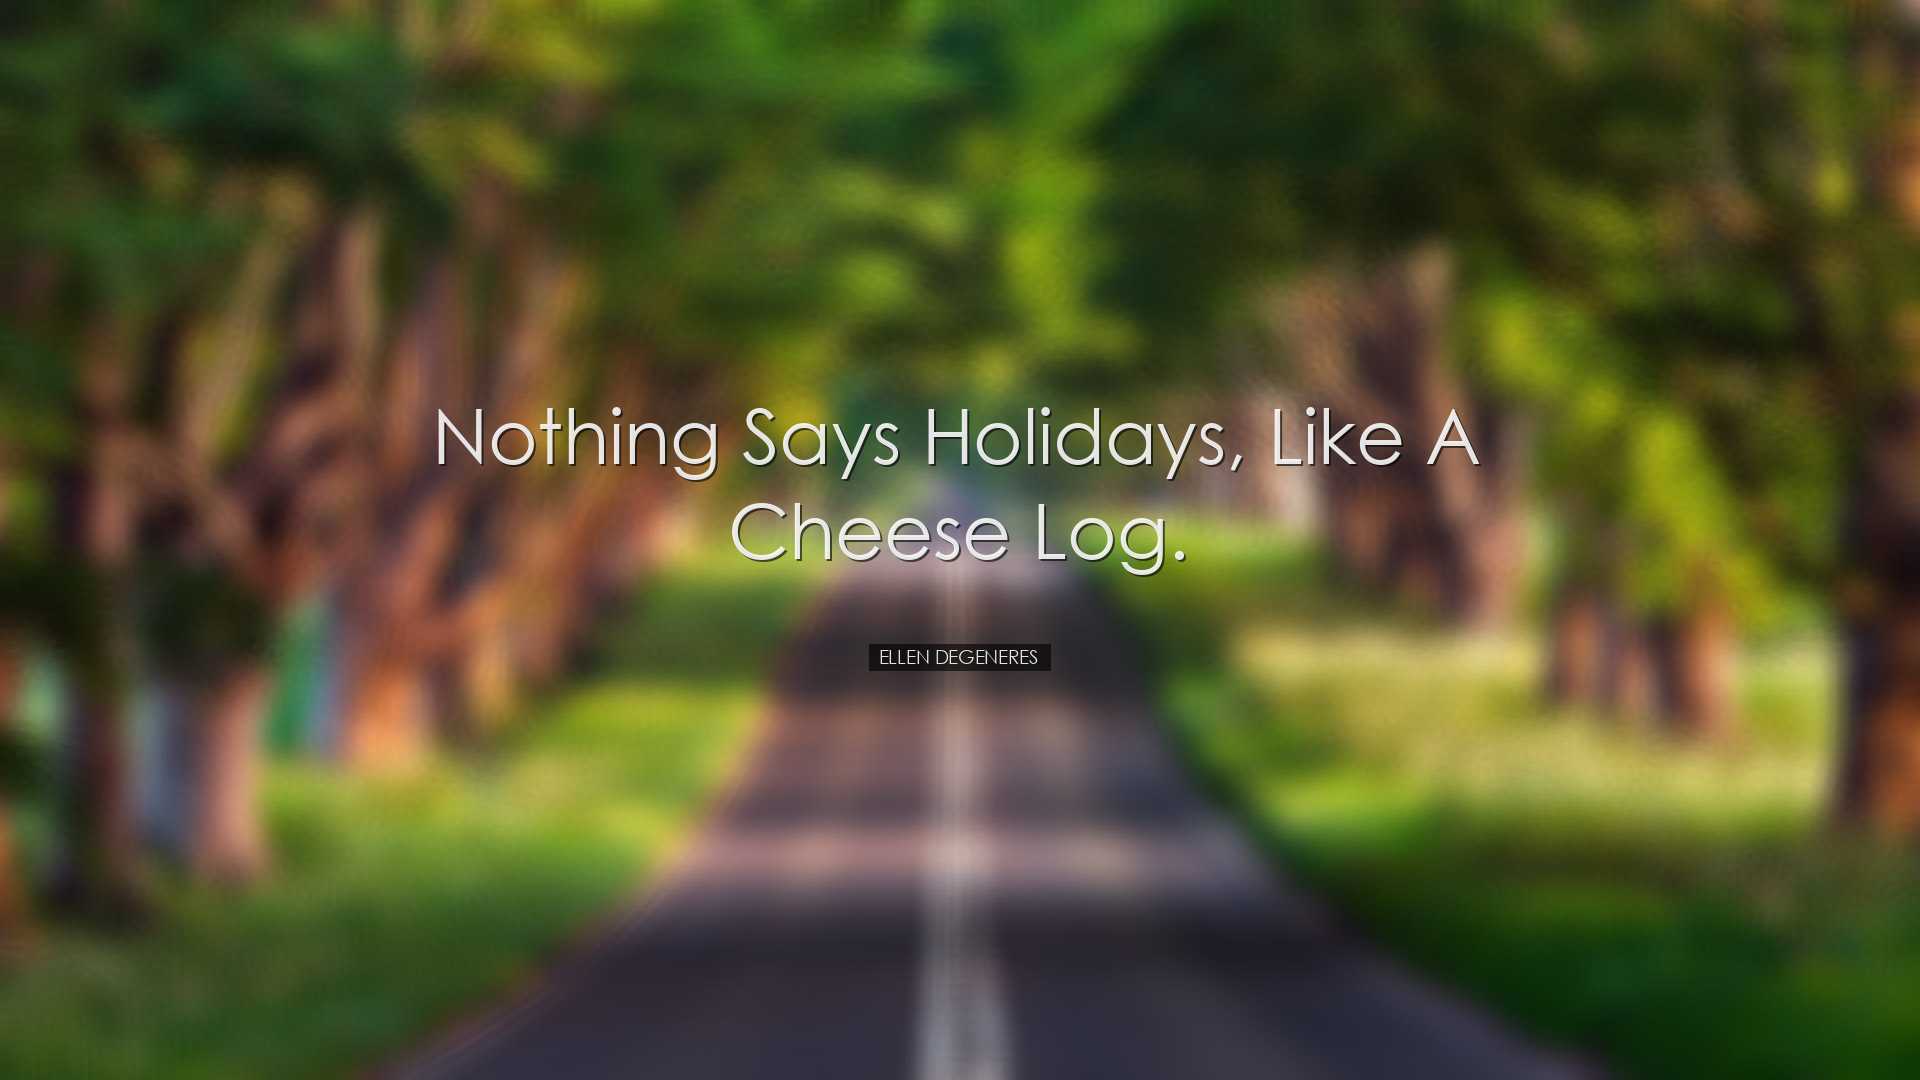 Nothing says holidays, like a cheese log. - Ellen DeGeneres